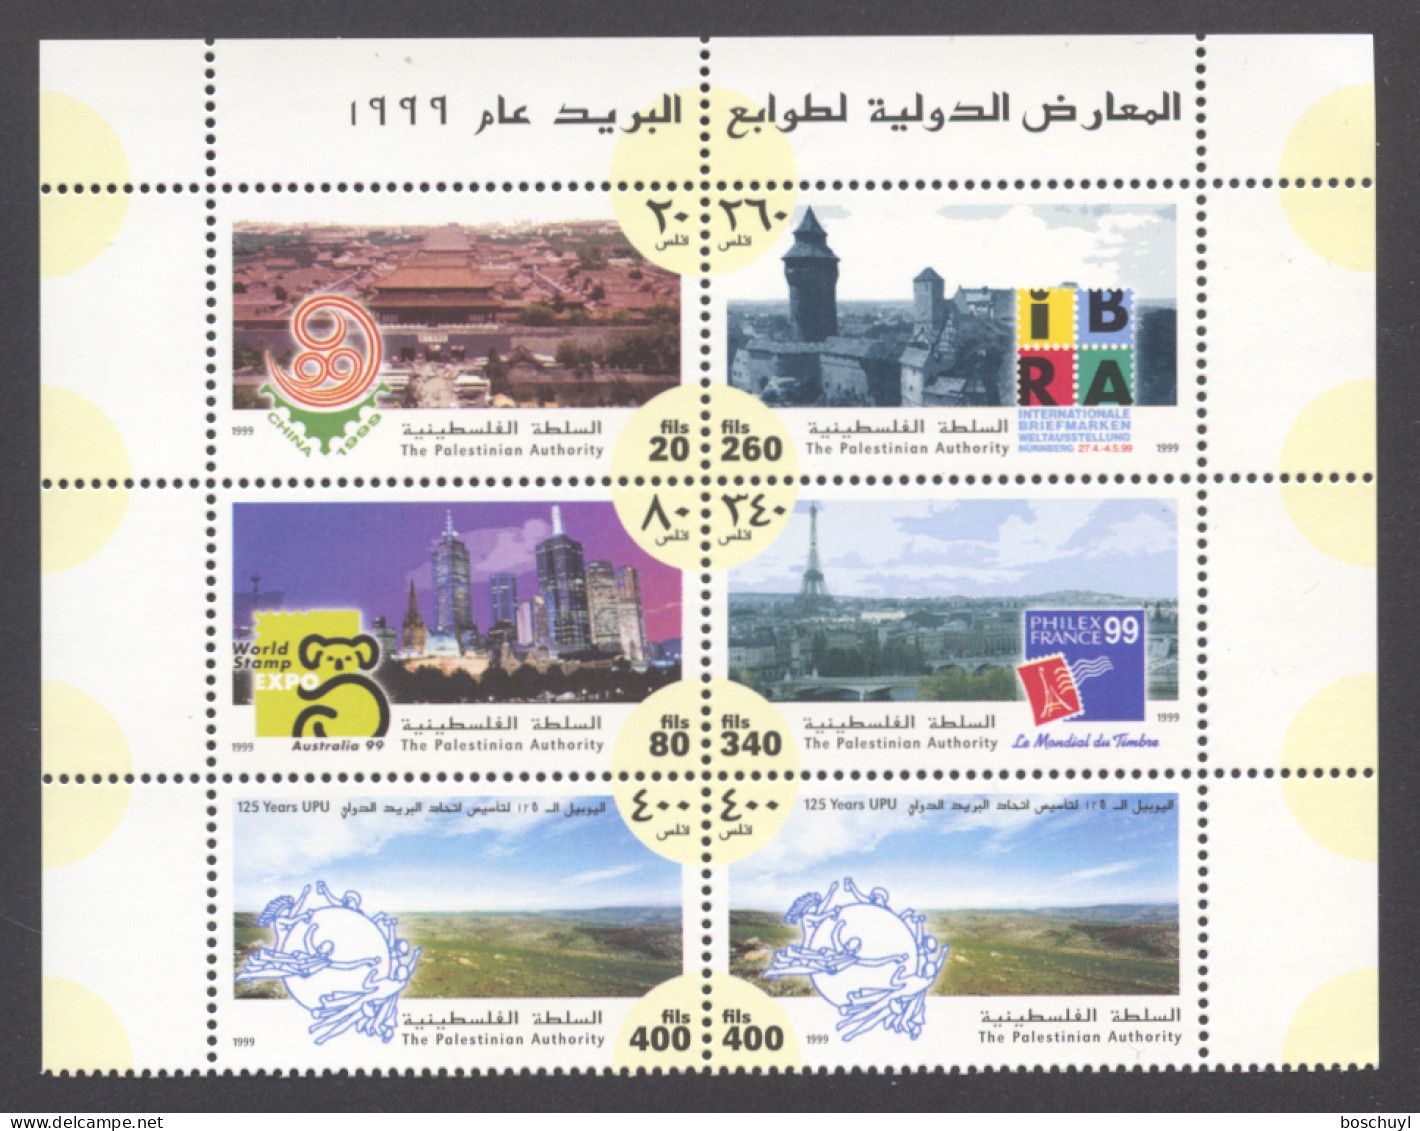 Palestine, 1999, UPU, Stamp Exhibitions, IBRA, Philexfrance, United Nations, MNH Block, Michel 105-110 - Palestine